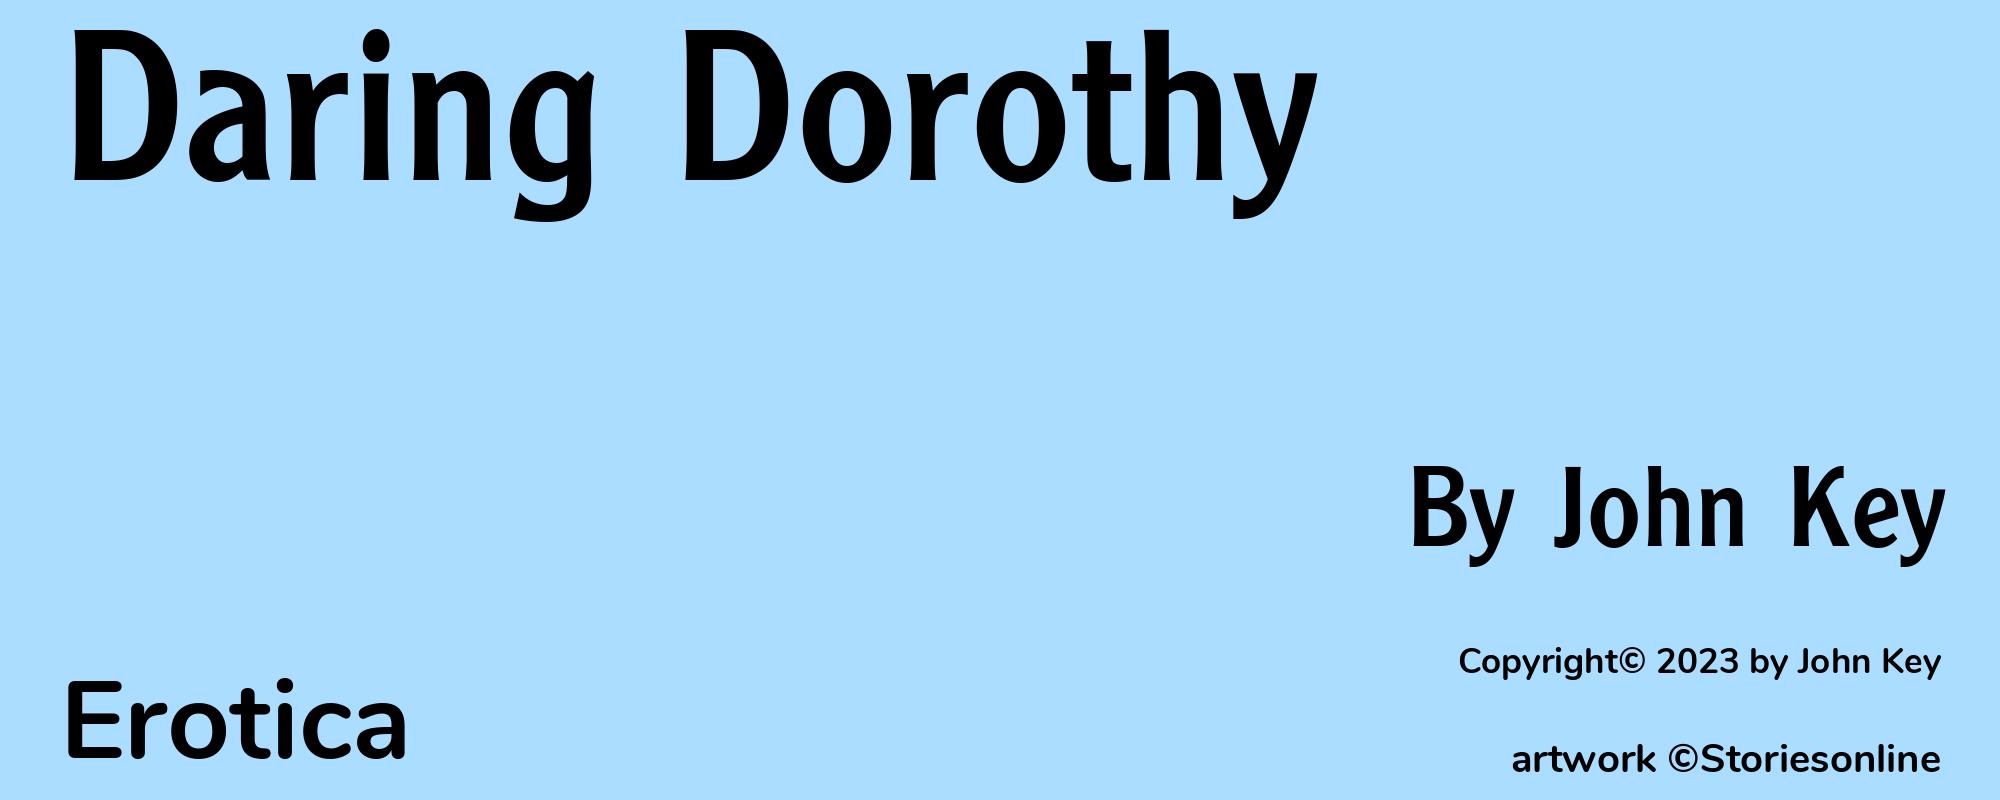 Daring Dorothy - Cover